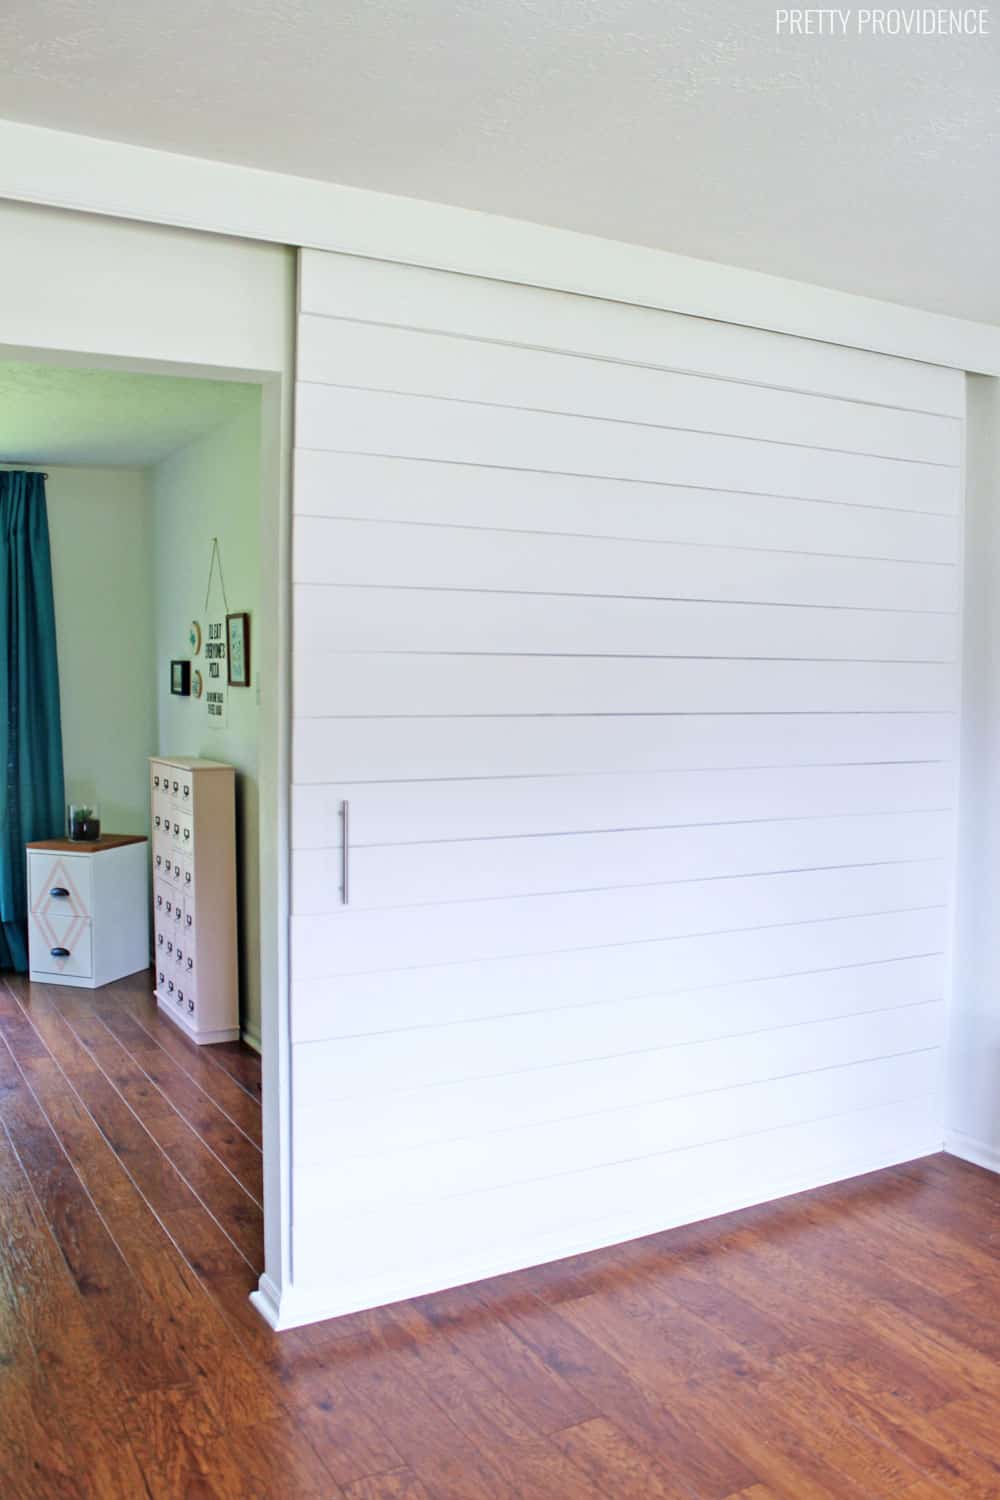 How to build a sliding barn door for a bathroom Diy Sliding Barn Door Under 250 Pretty Providence